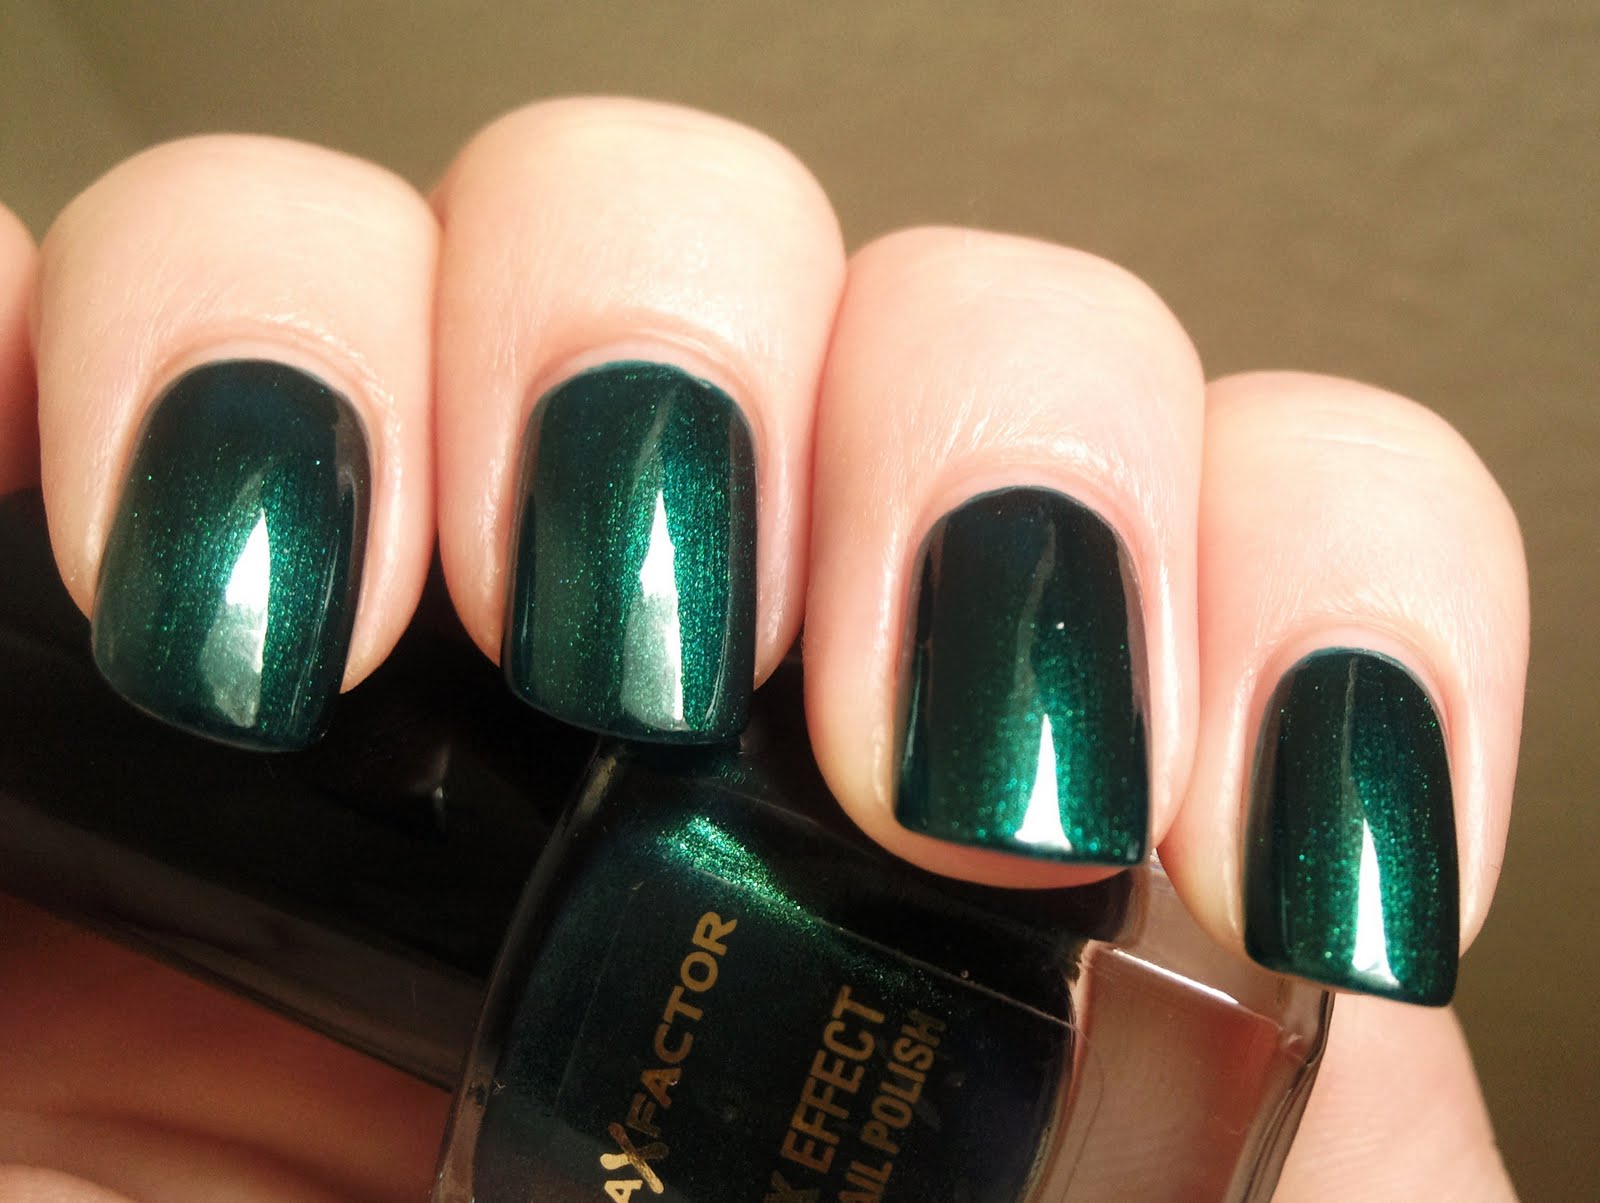 1. Jade Cosmetics Nail Polish in "Emerald Green" - wide 2